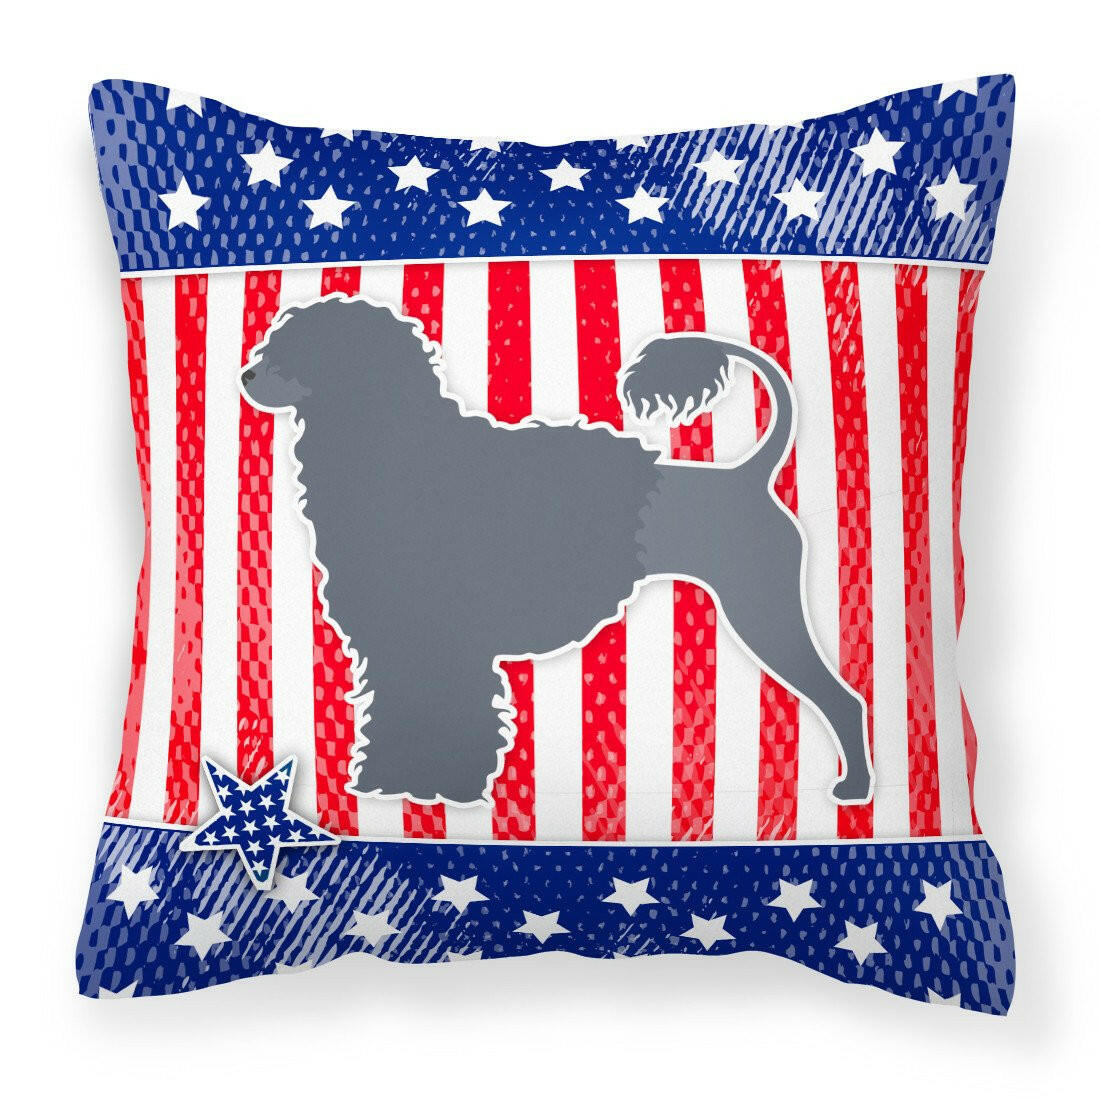 USA Patriotic Portuguese Water Dog Fabric Decorative Pillow BB3368PW1818 by Caroline's Treasures